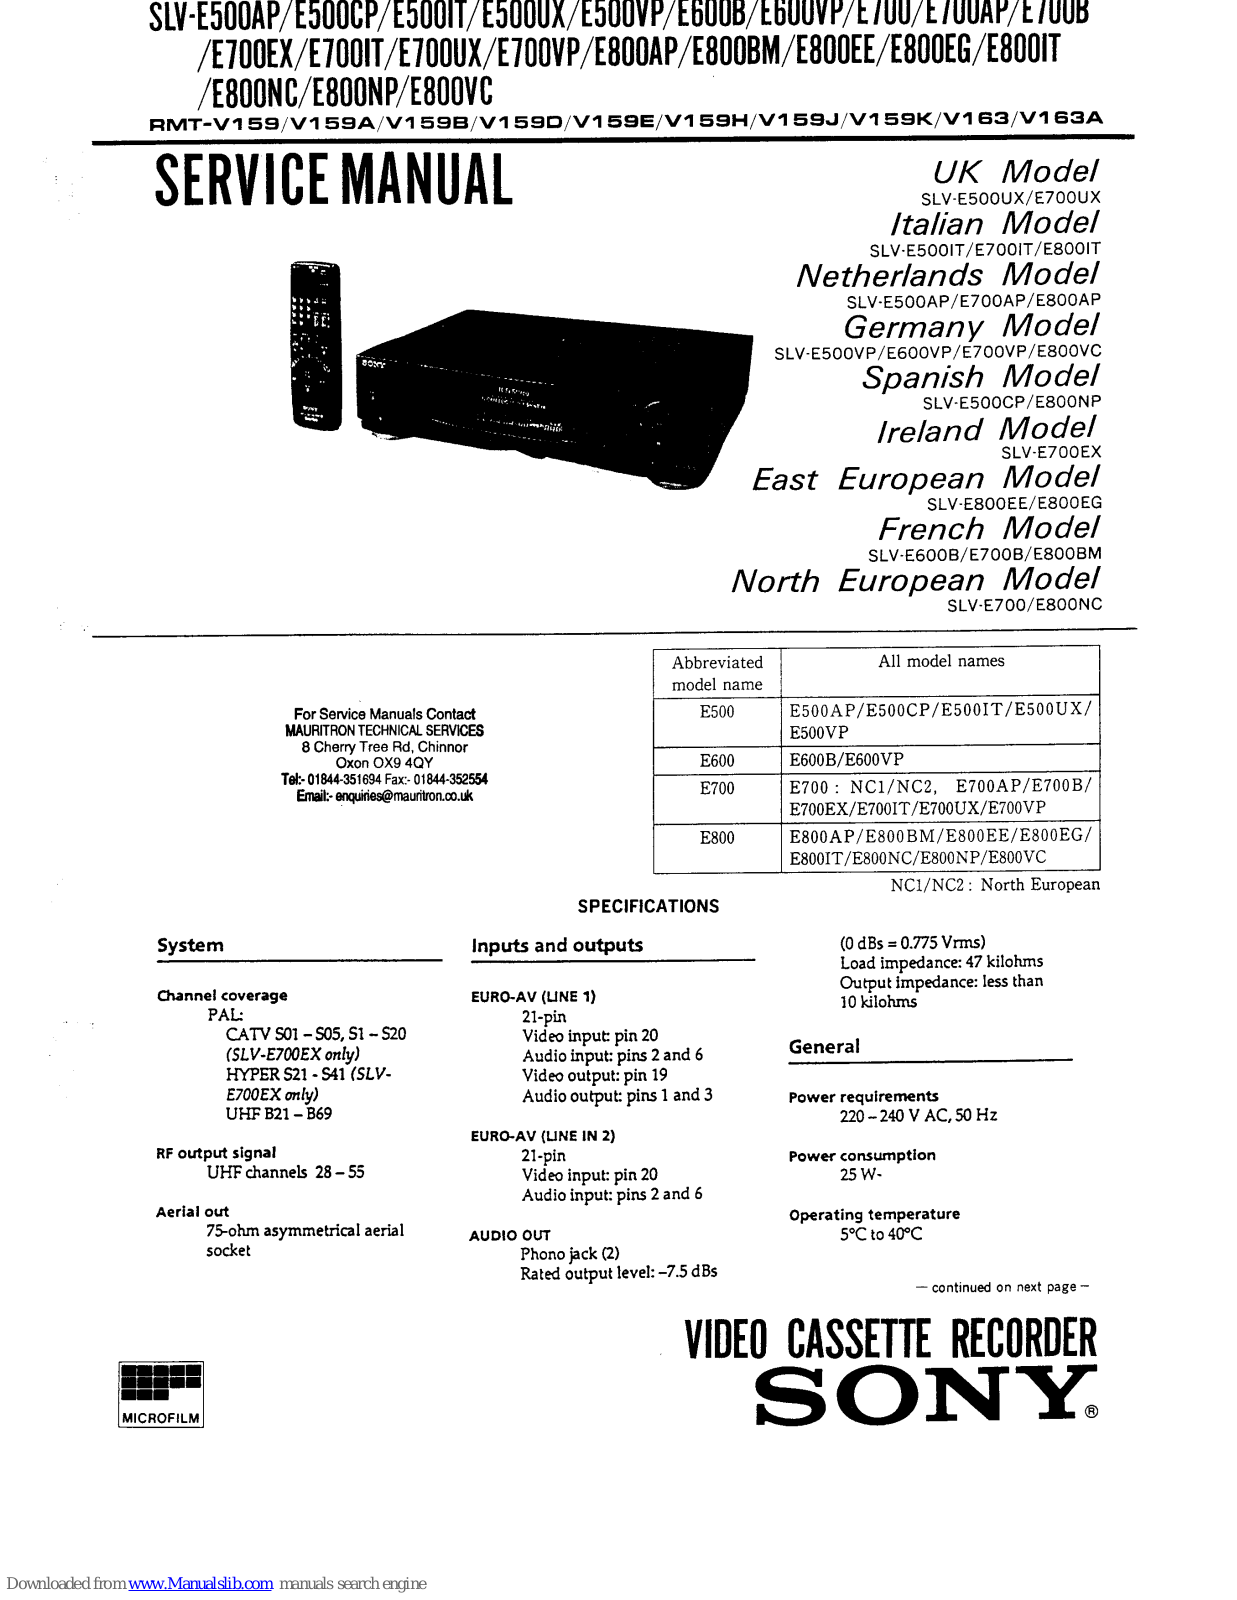 Sony SLV-E500CP, SLV-E600VP, SLV-E500VP, SLV-E600B, SLV-E700 Service Manual